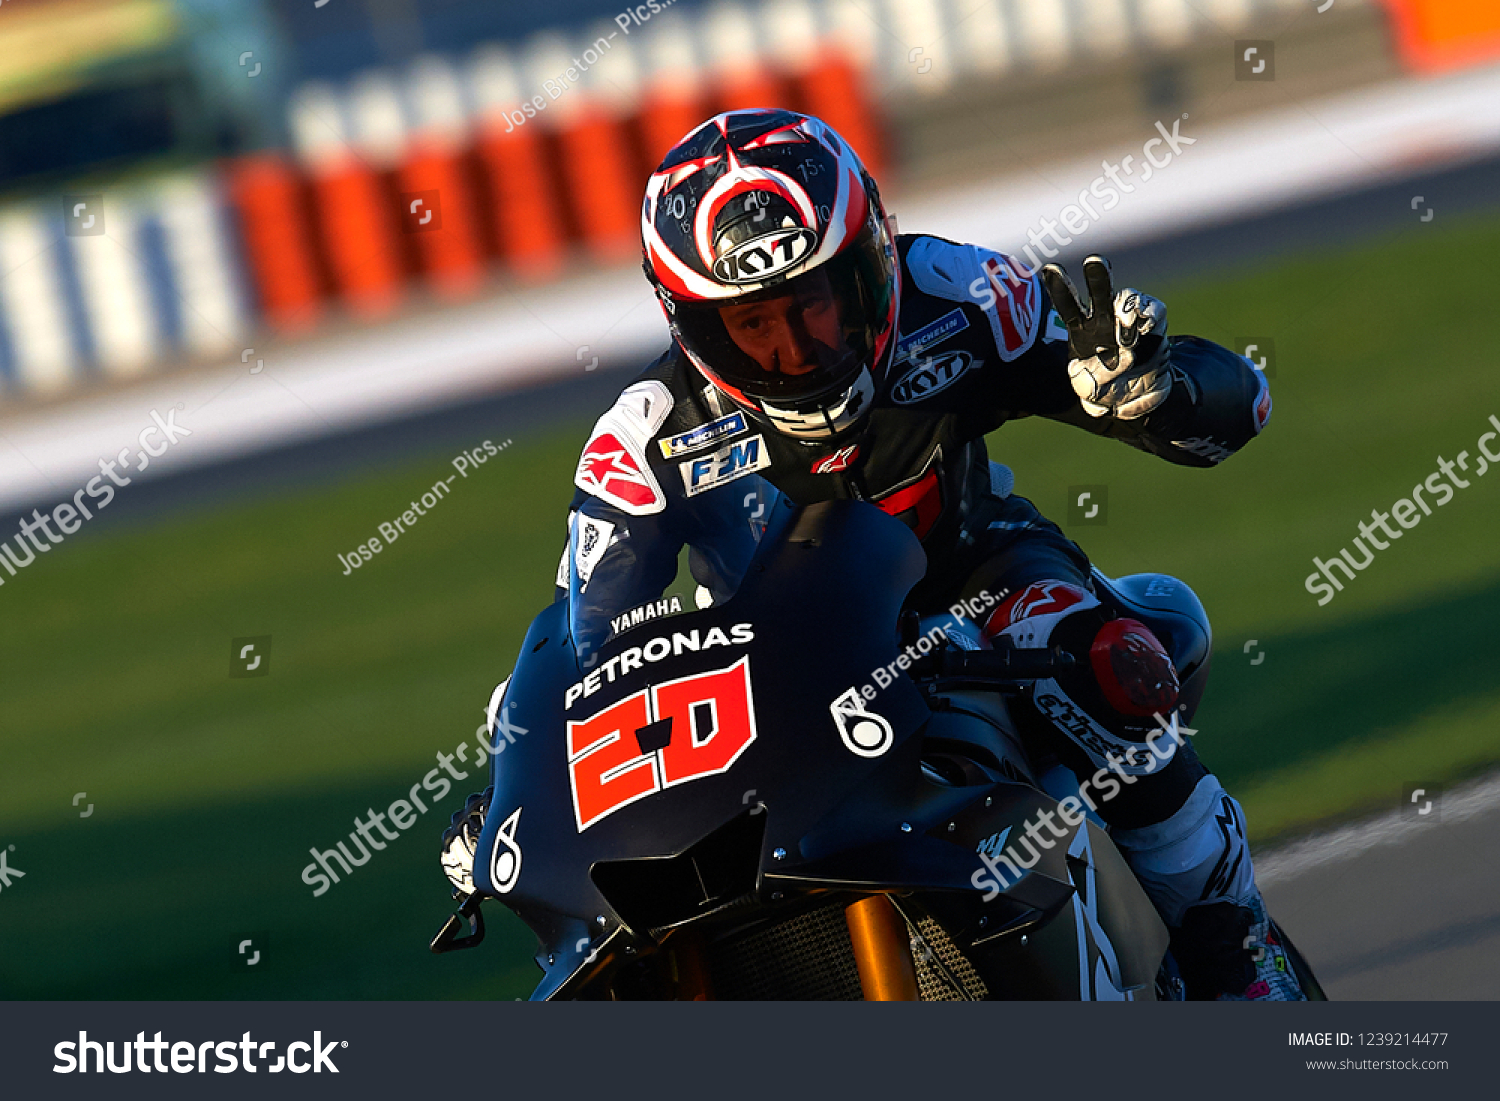 Fabio Quartararo 20 France Petronas Yamaha Stock Photo Edit Now 1239214477